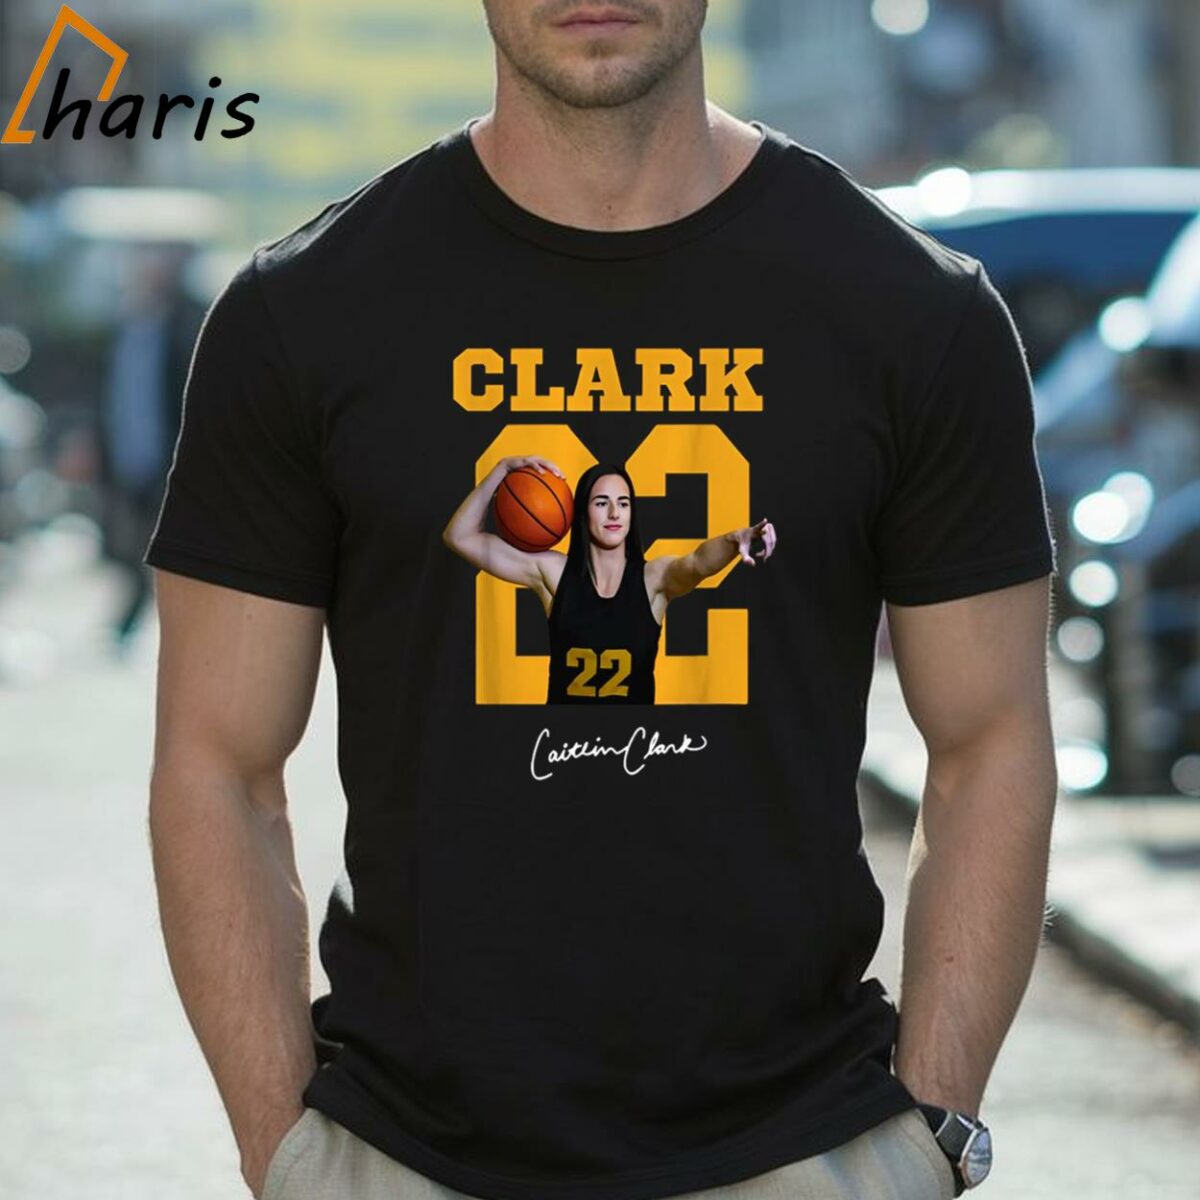 Clark 22 Caitlin Clark T shirt 2 Shirt